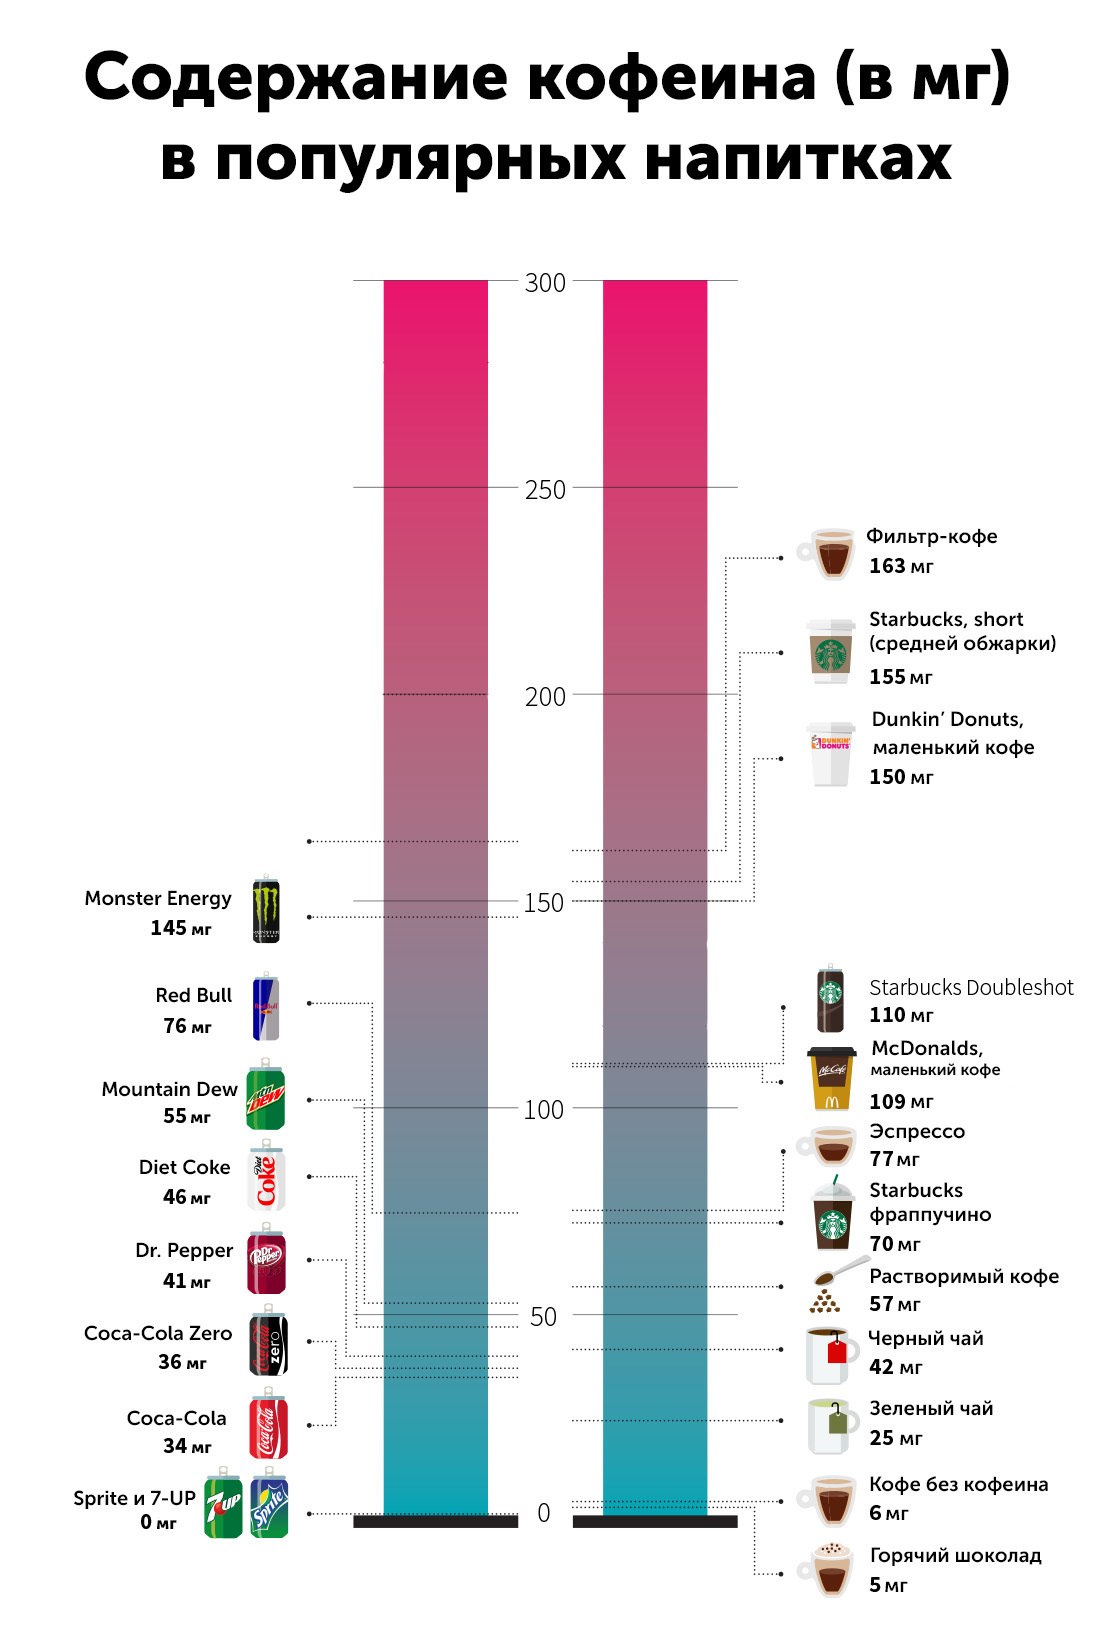 150 мг кофеина. Содержание кофеина. Количество кофеина в энергетике. Содержание кофеина в напитках. Содержание кофеина в энергетиках таблица.